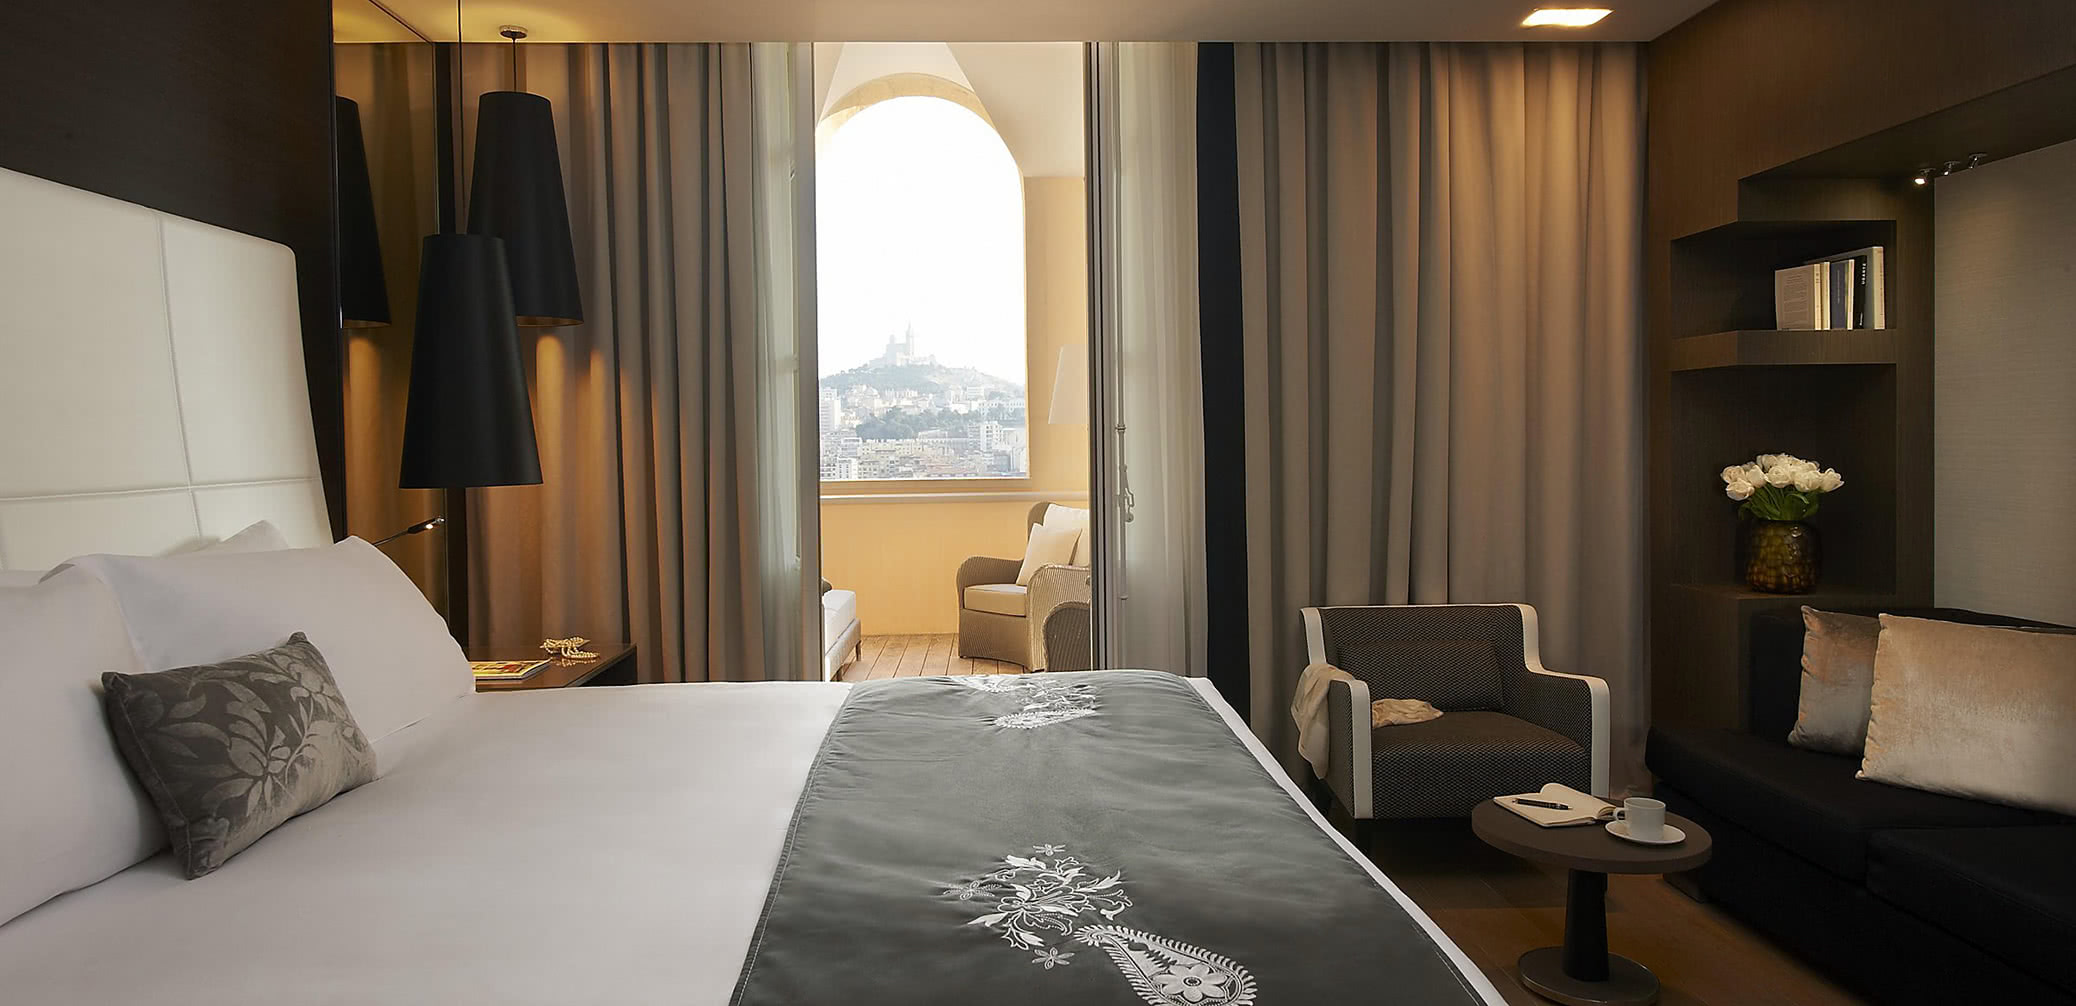 Review: Intercontinental Marseille – Hotel Dieu